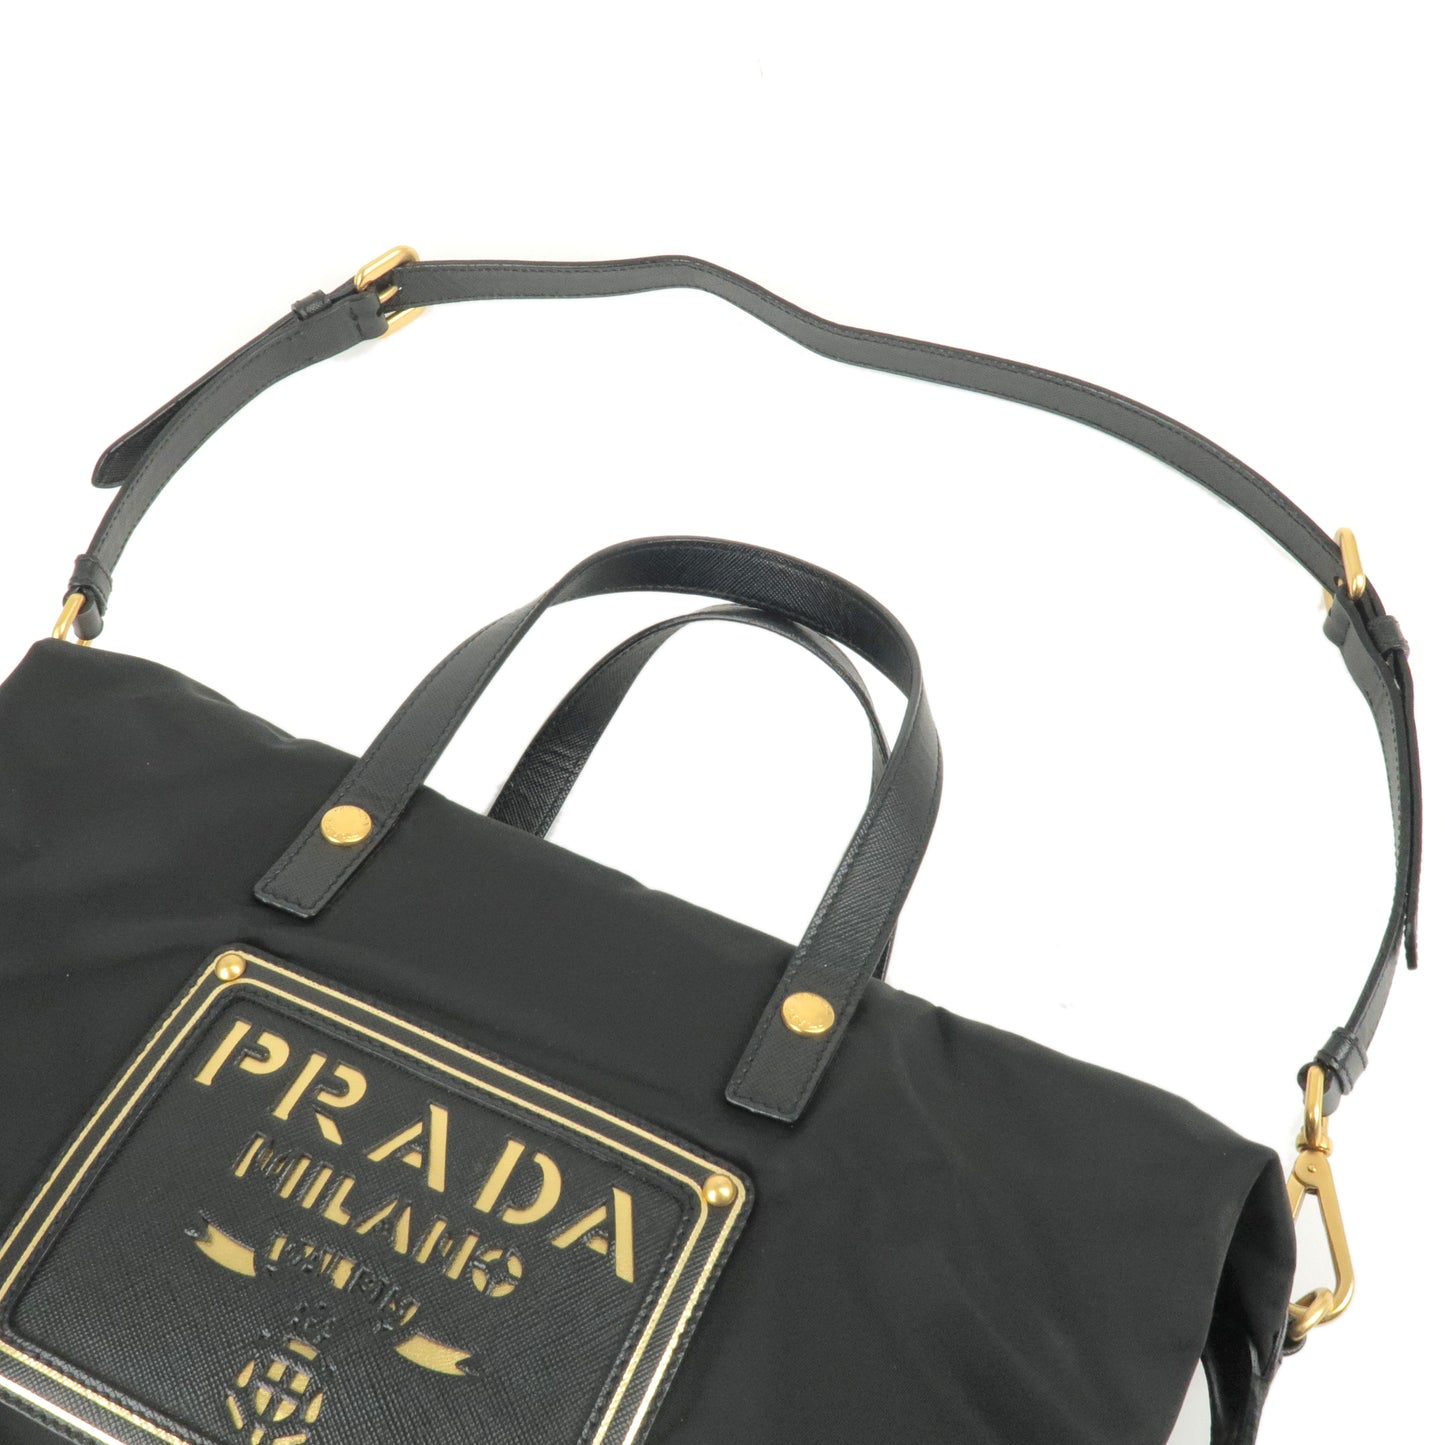 PRADA Logo Nylon Leather 2Way Bag Hand Bag Black NERO BN1407